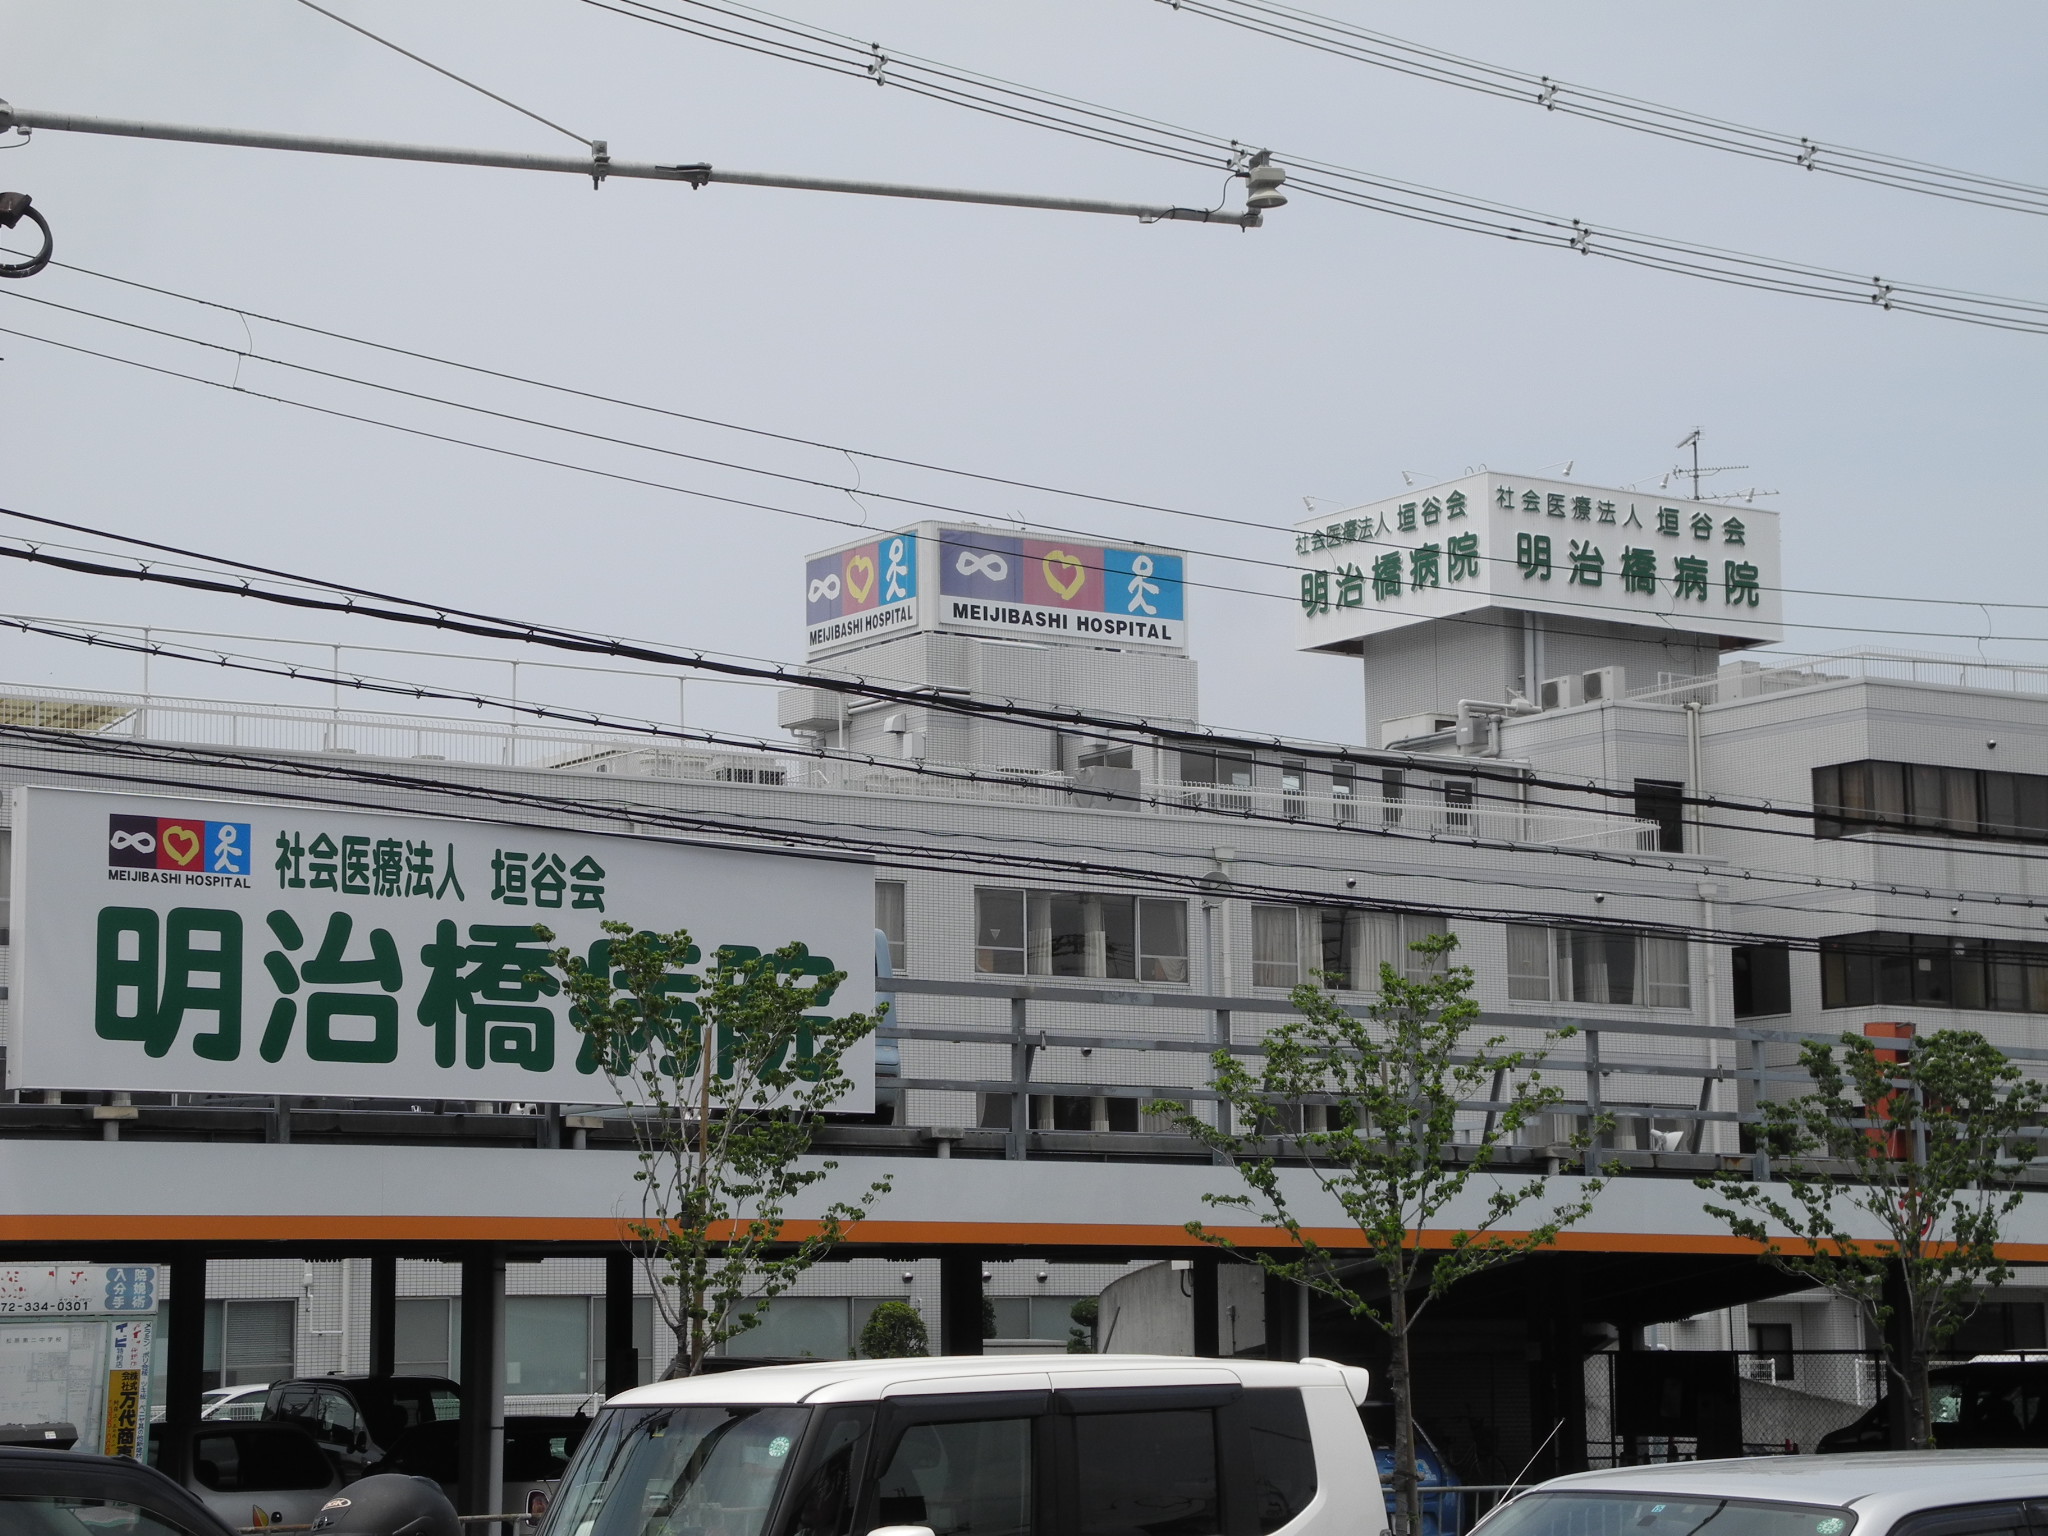 Hospital. 875m until the medical corporation Kakitani Board Meiji Bridge Hospital (Hospital)